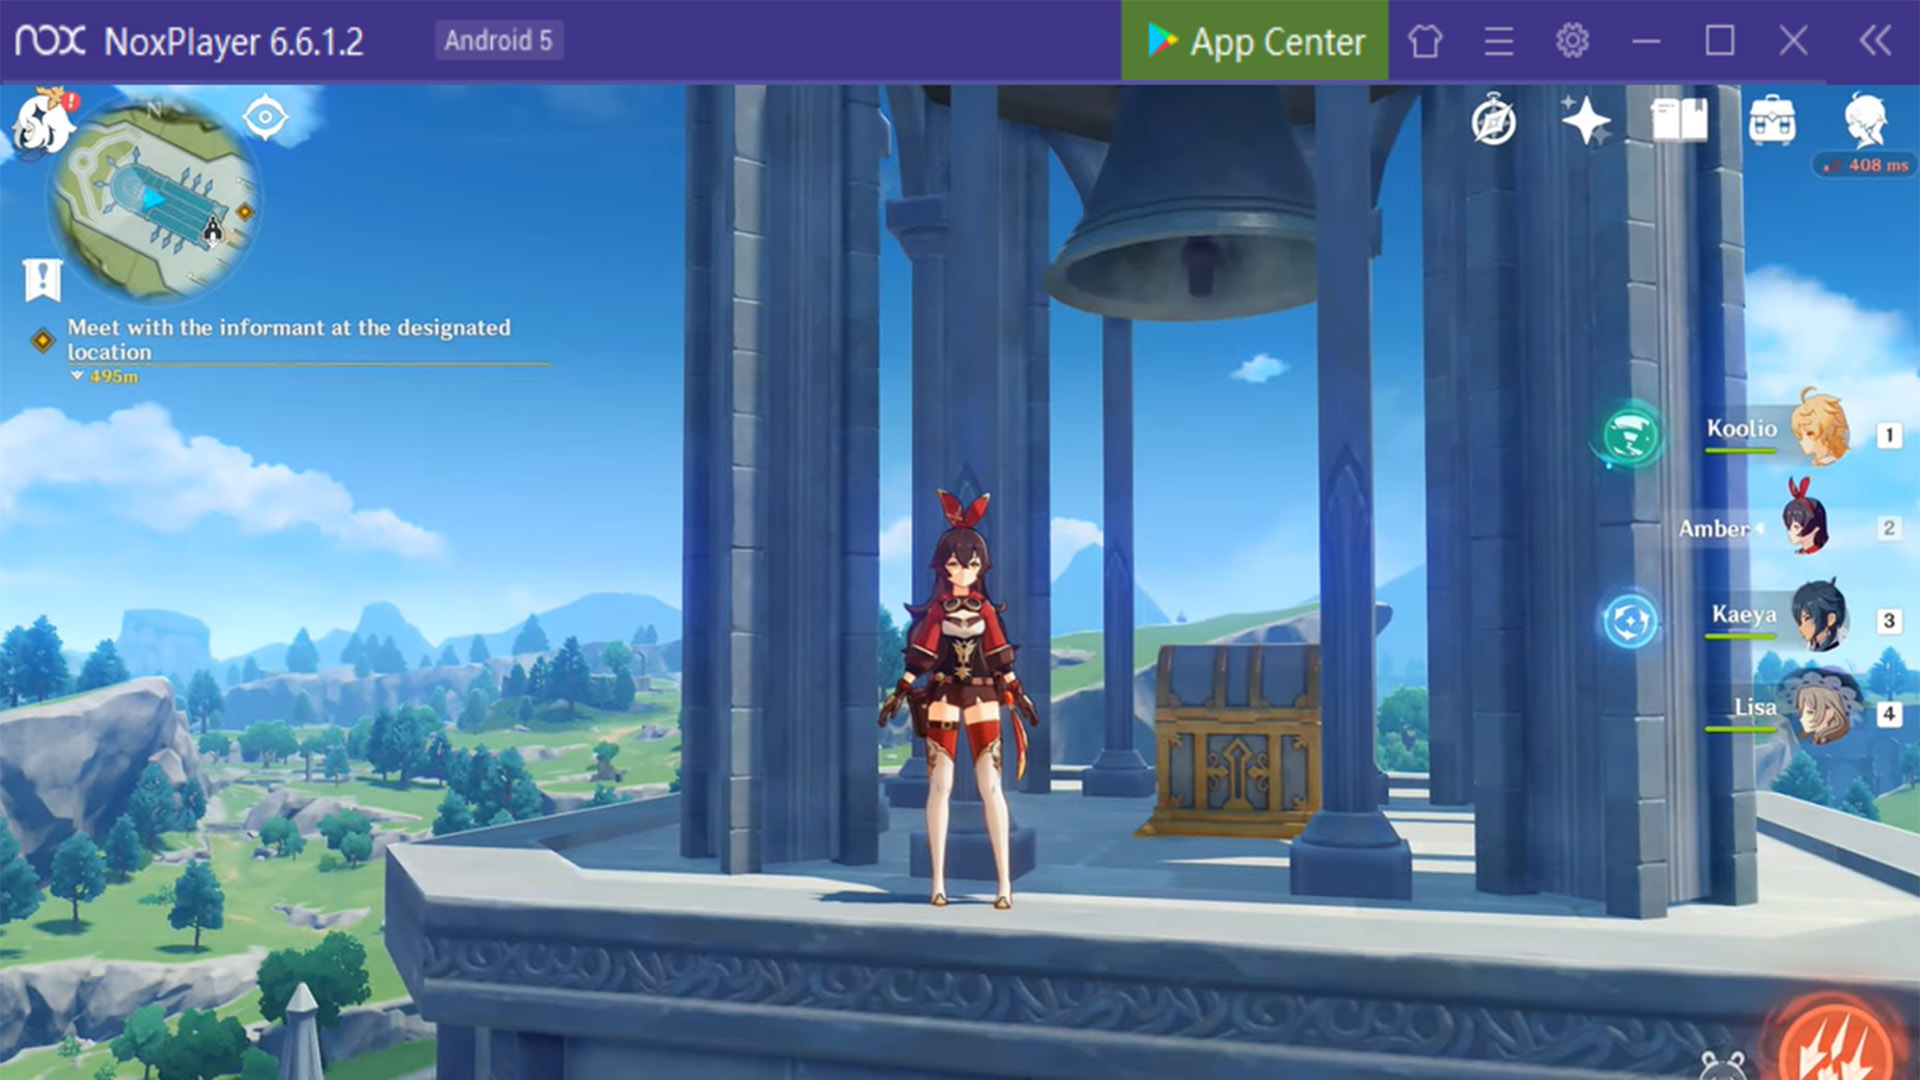 Nox Player screenshot 2021